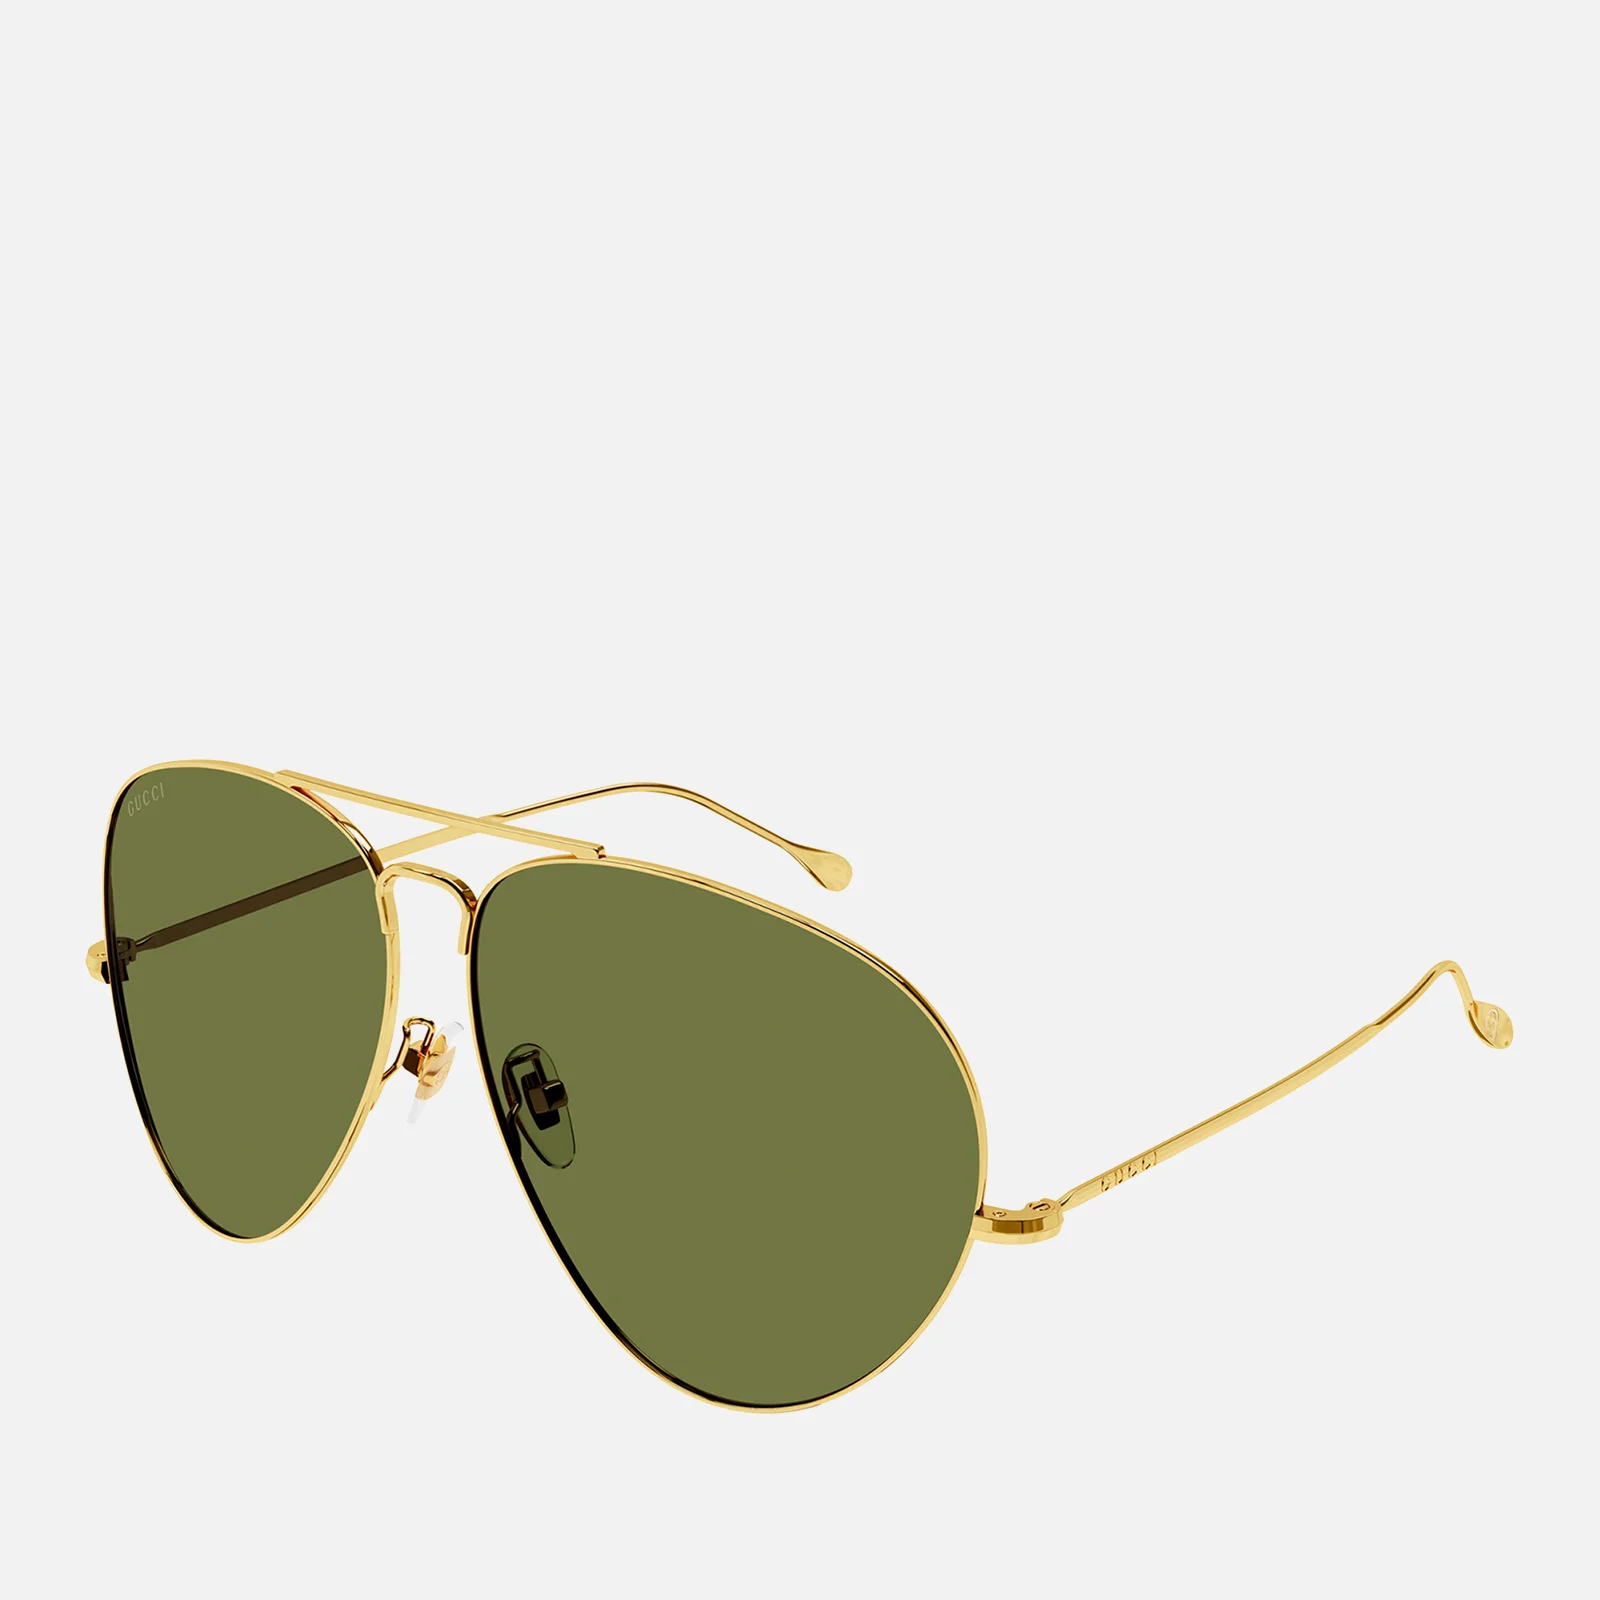 Gucci Metal Aviator-Style Sunglasses Image 1